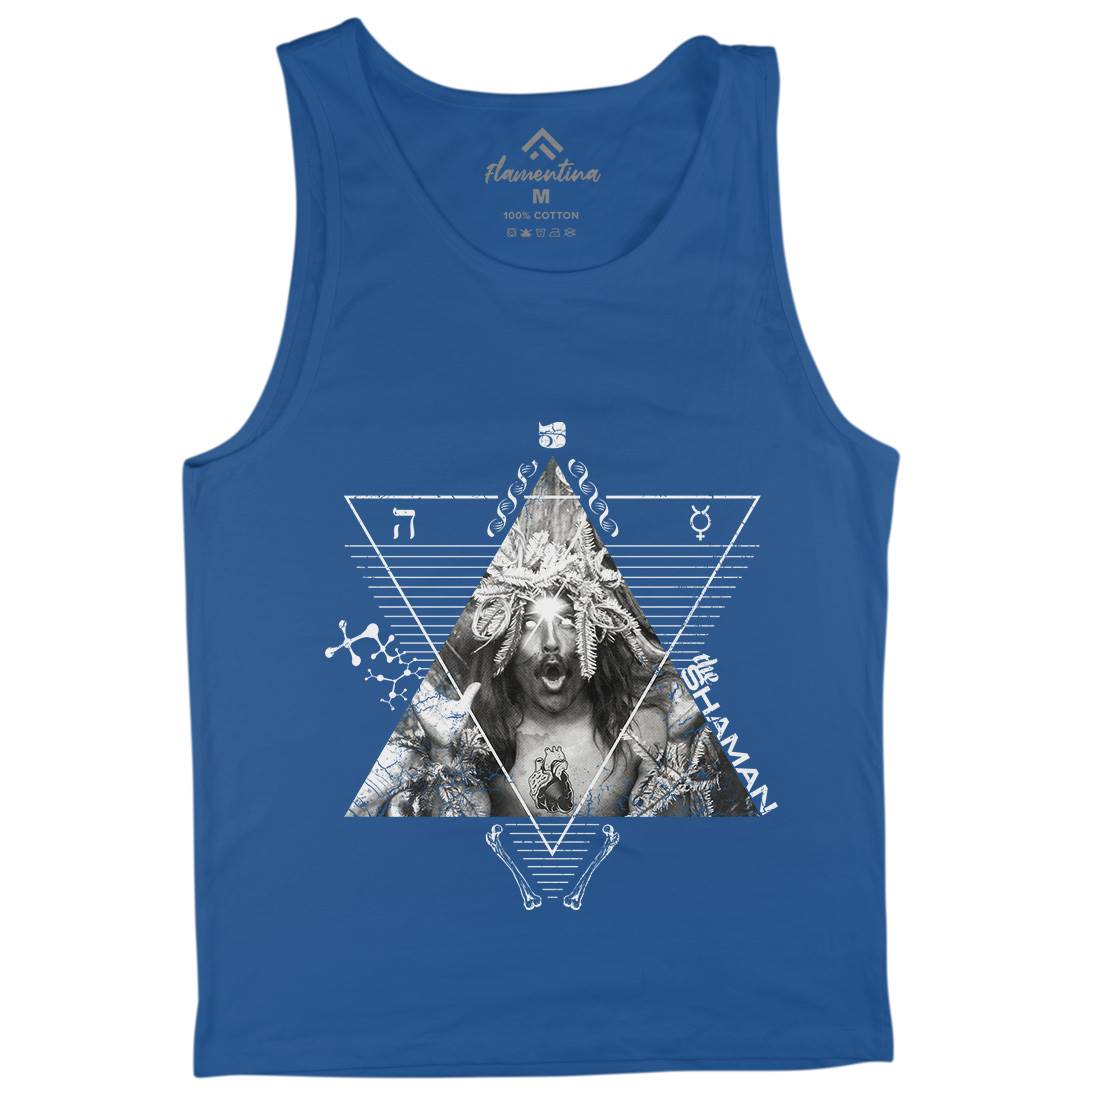 The Shaman Mens Tank Top Vest Illuminati A927